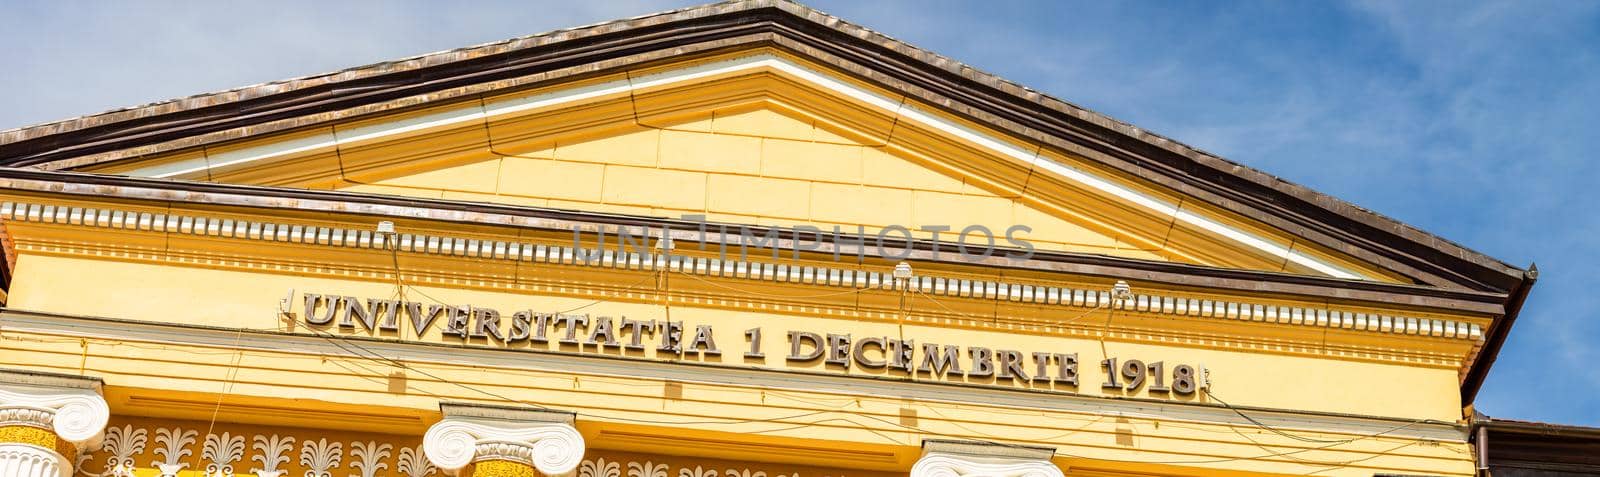 Architectural details, facade of the building of the 1 Decembrie 1918 University, Alba Iulia, Romania, 2021 by vladispas